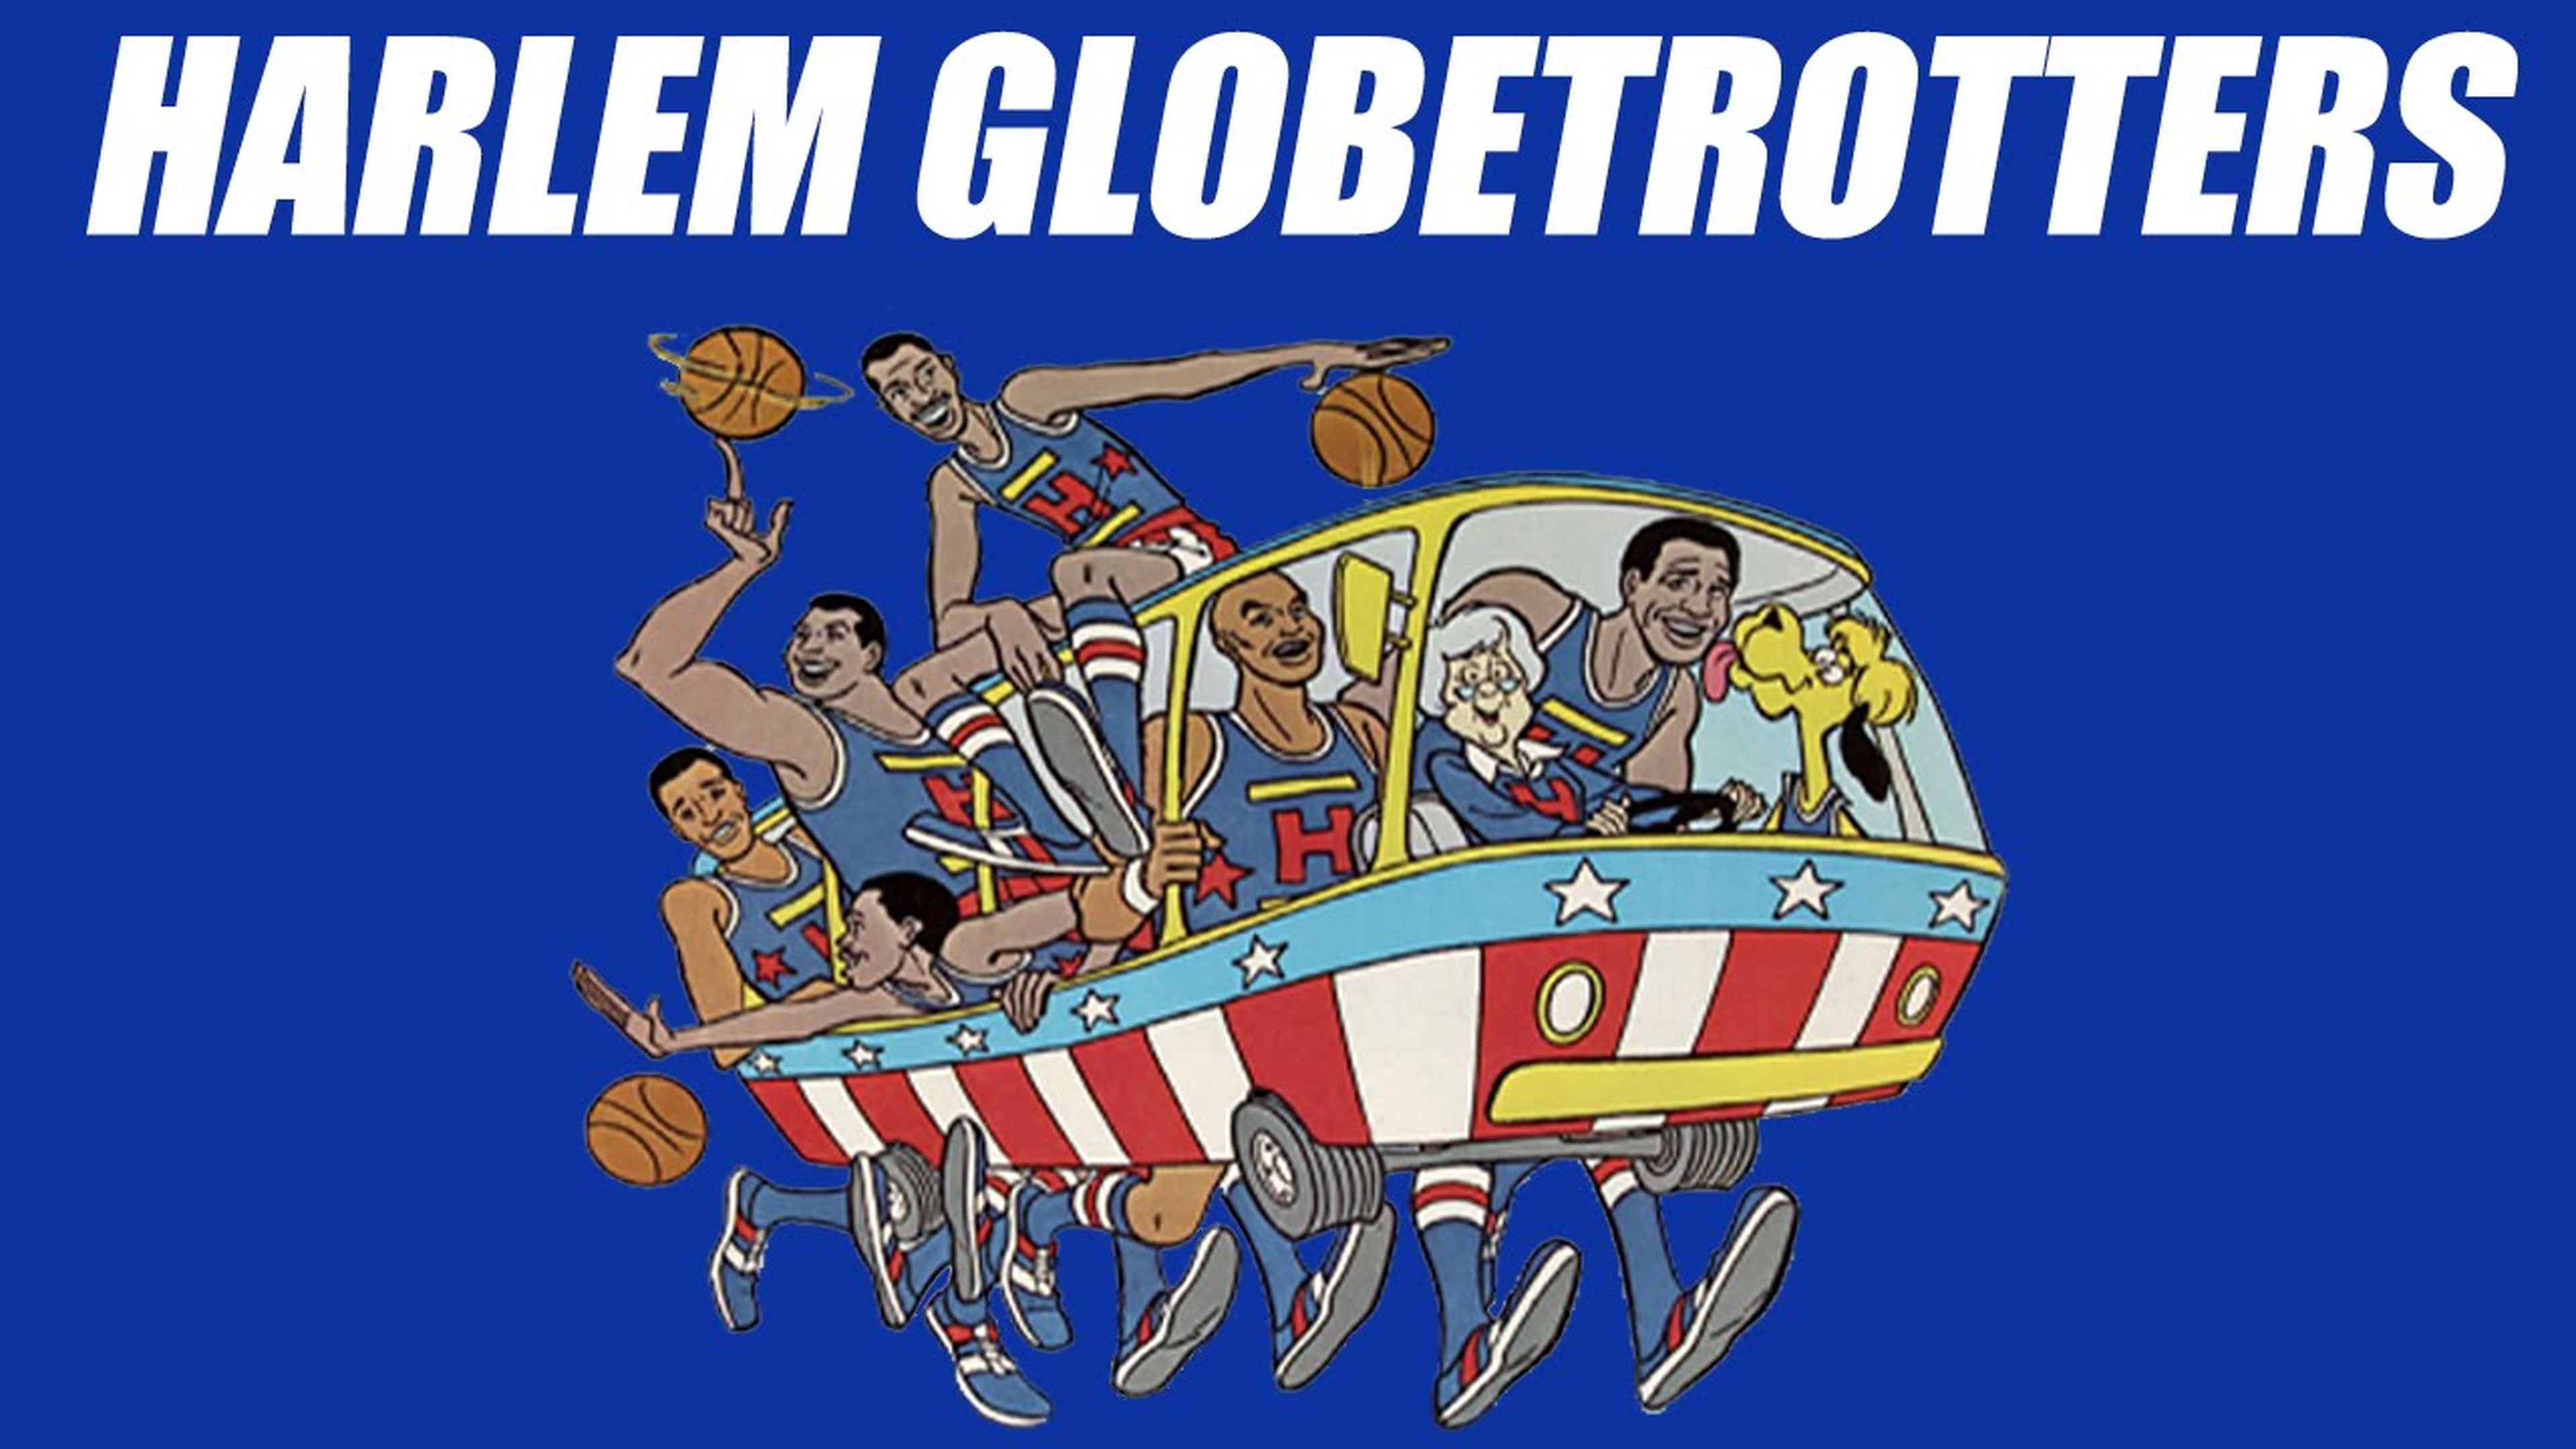 Harlem Globetrotters (TV series)